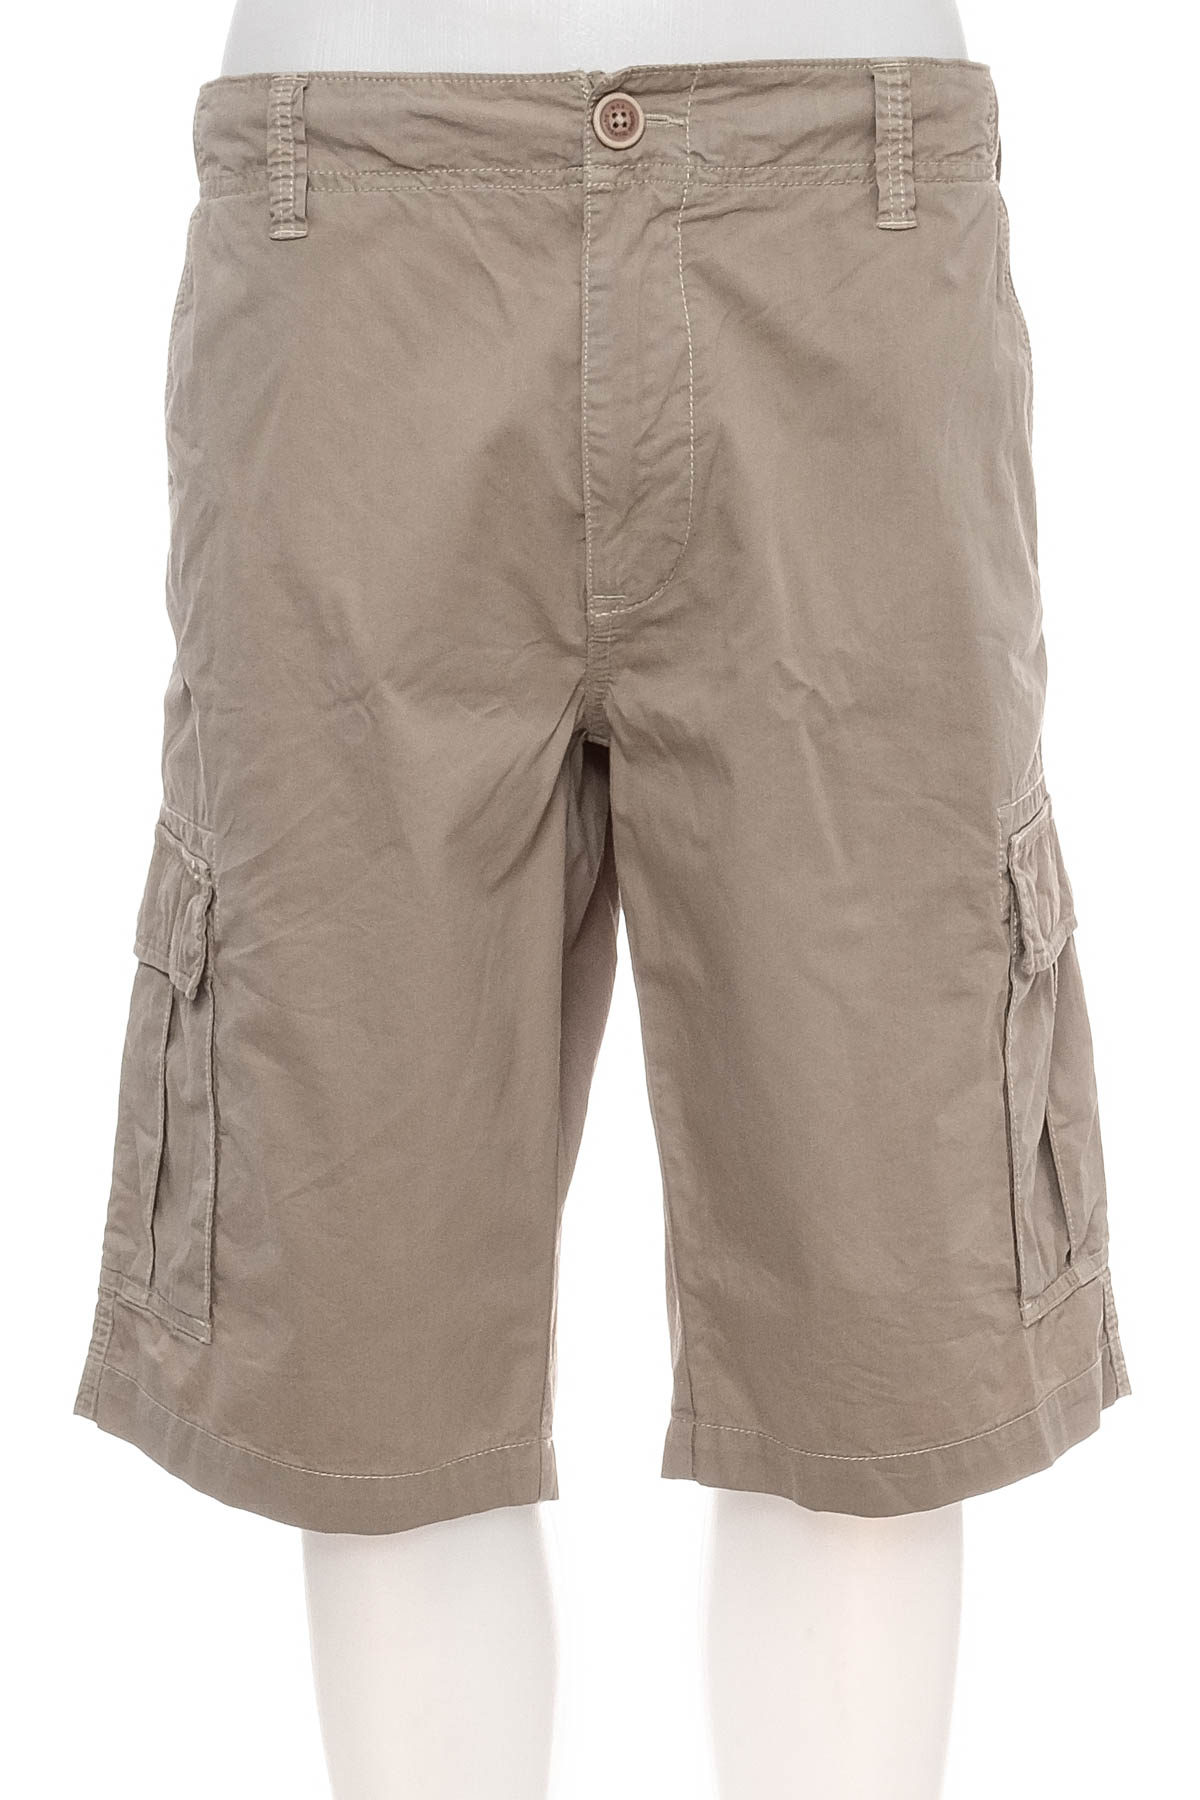 Men's shorts - MCS - 0